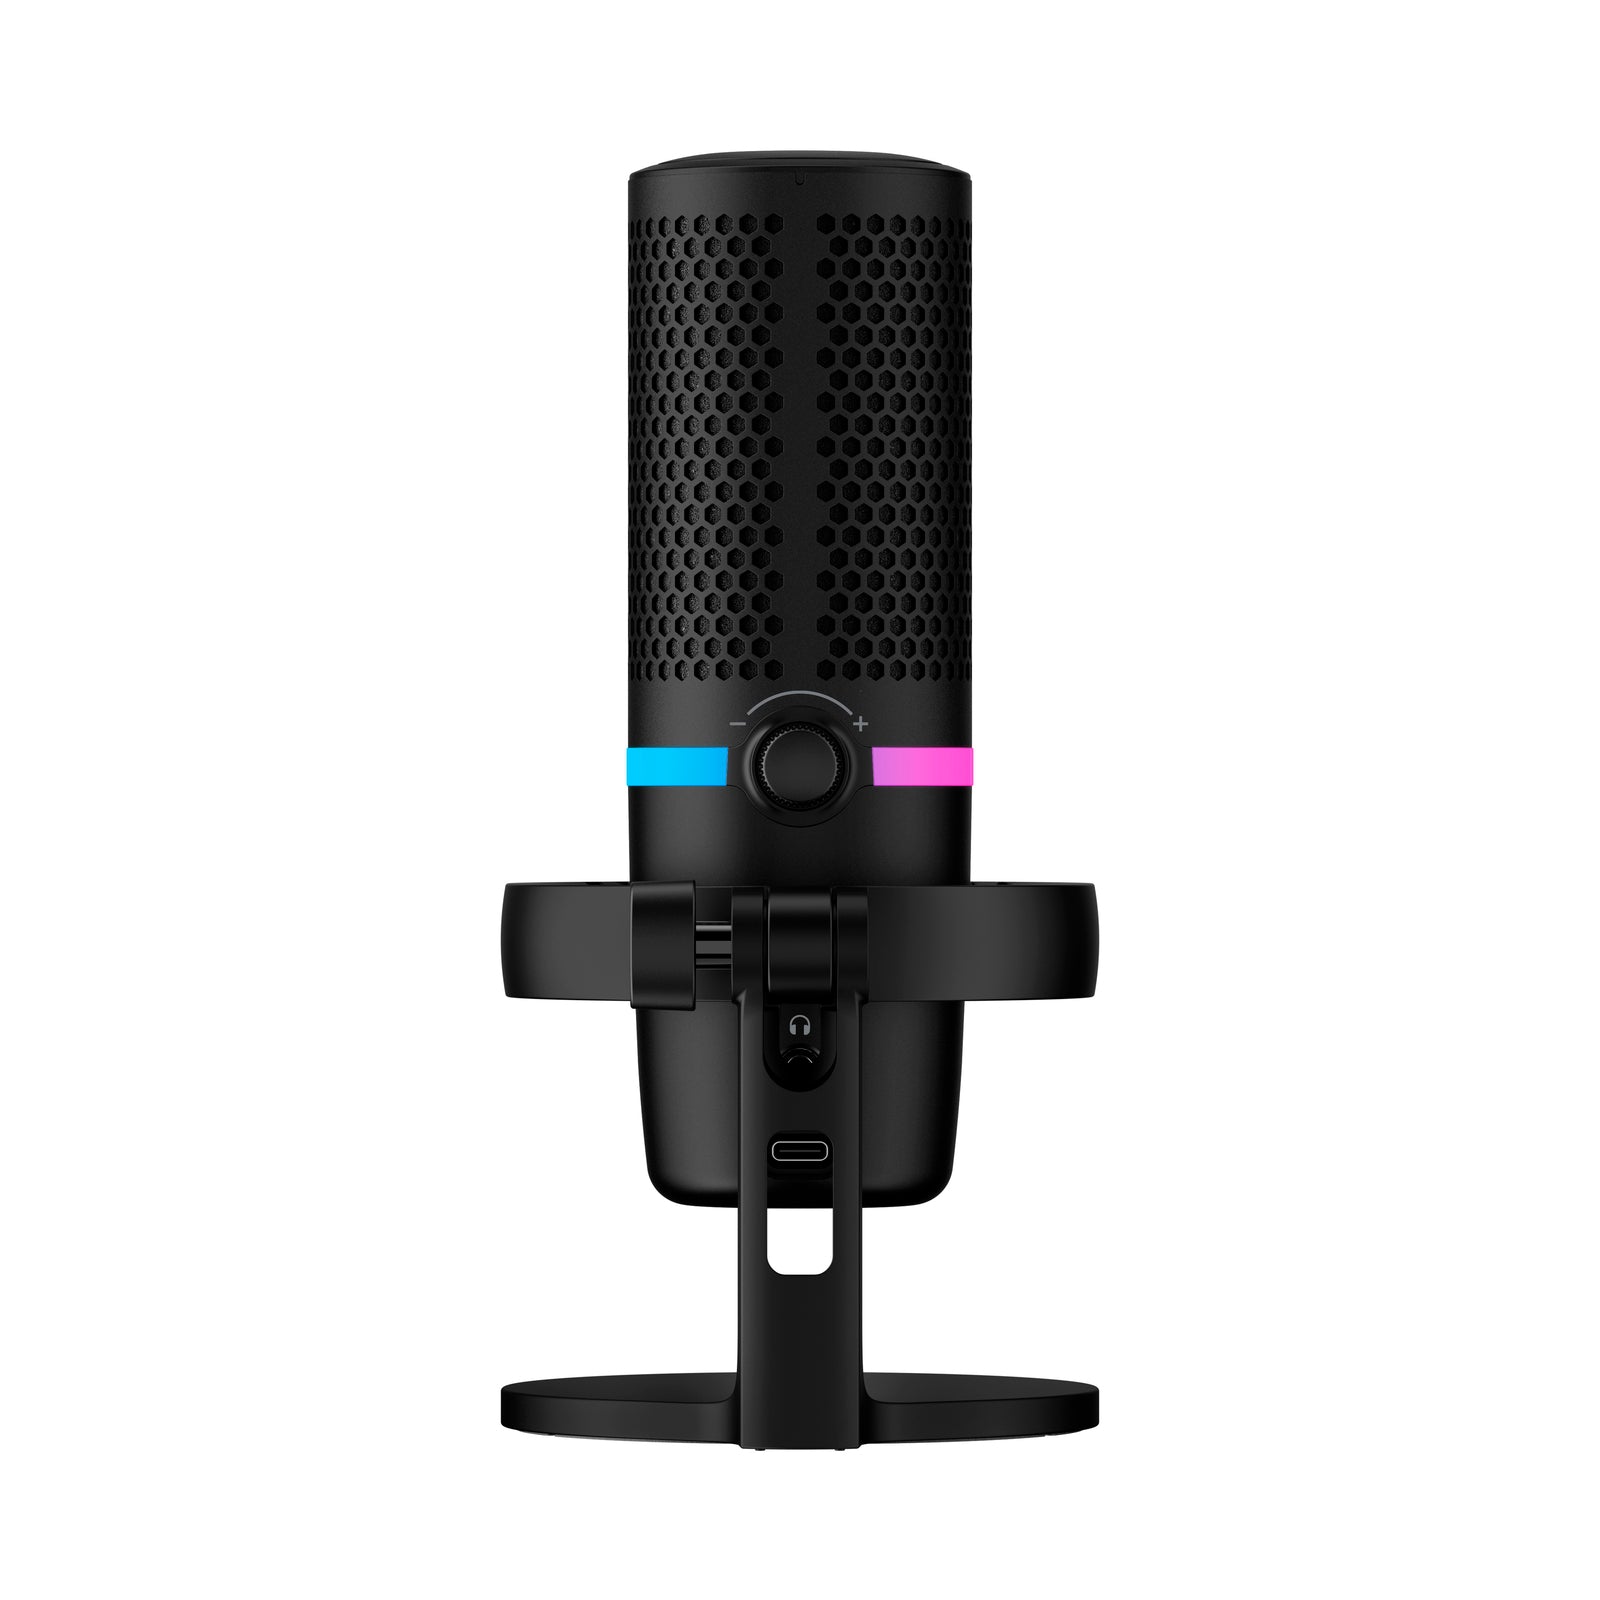 Customer Reviews: HyperX QuadCast S - USB Microphone